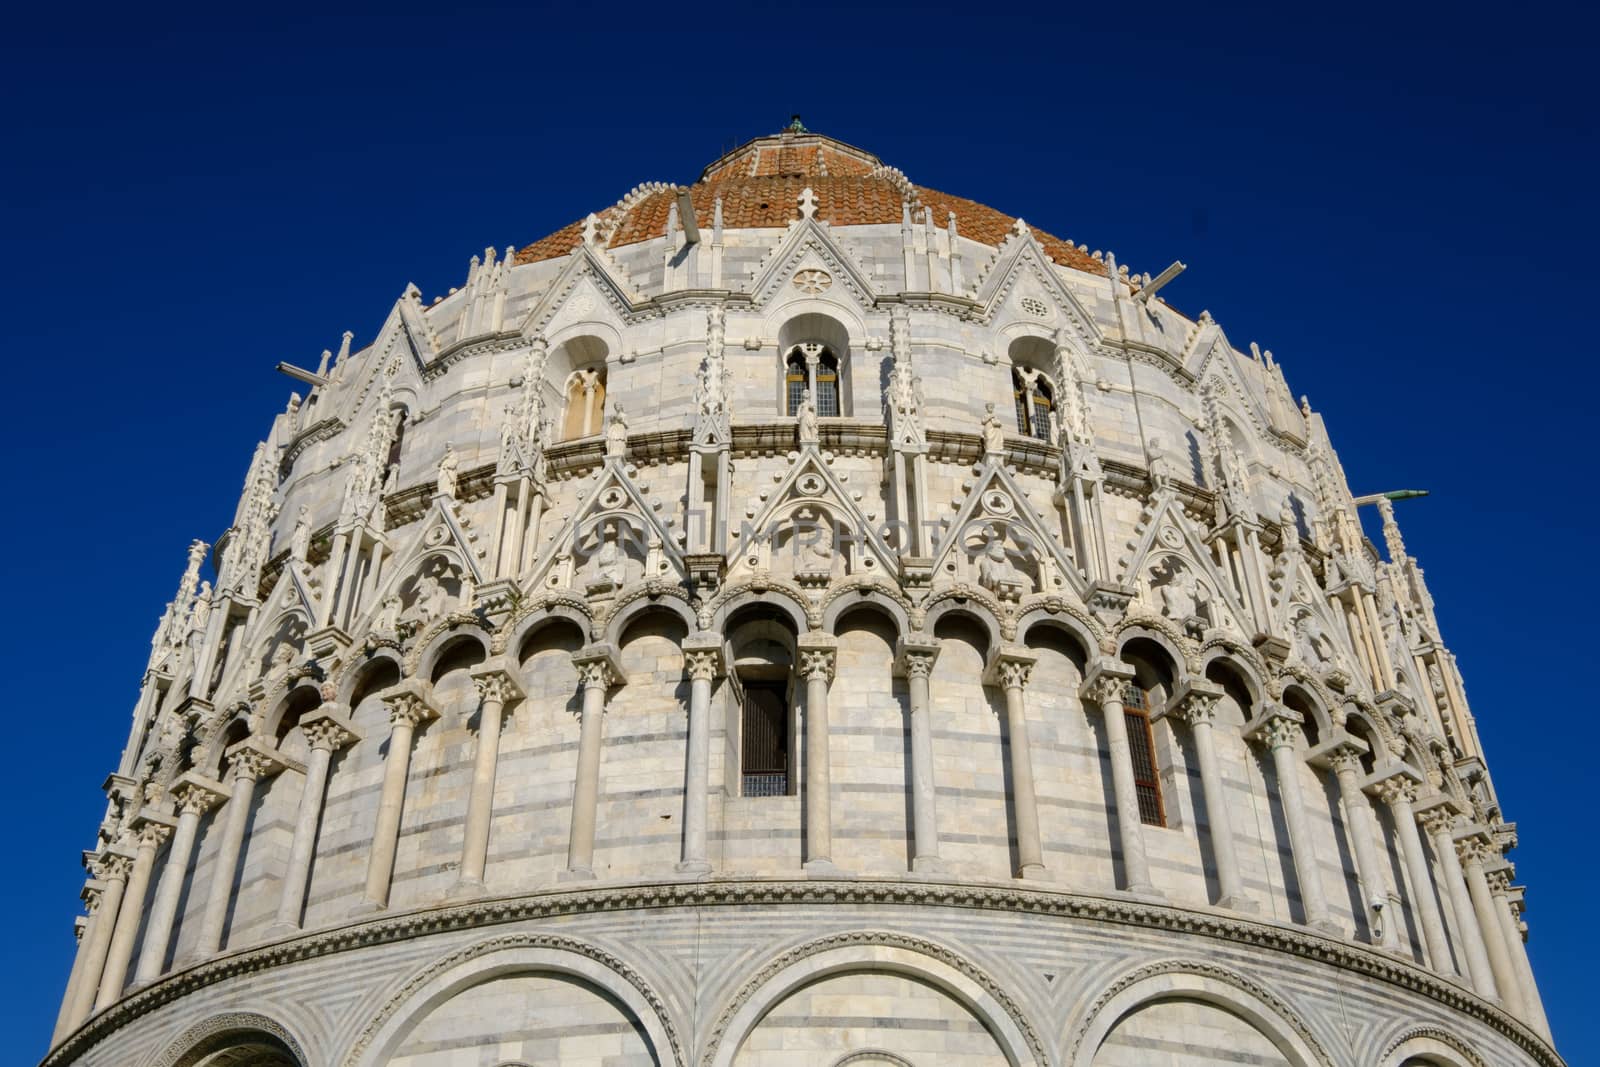 The Pisa Baptistery of St. John at Piazza dei Miracoli